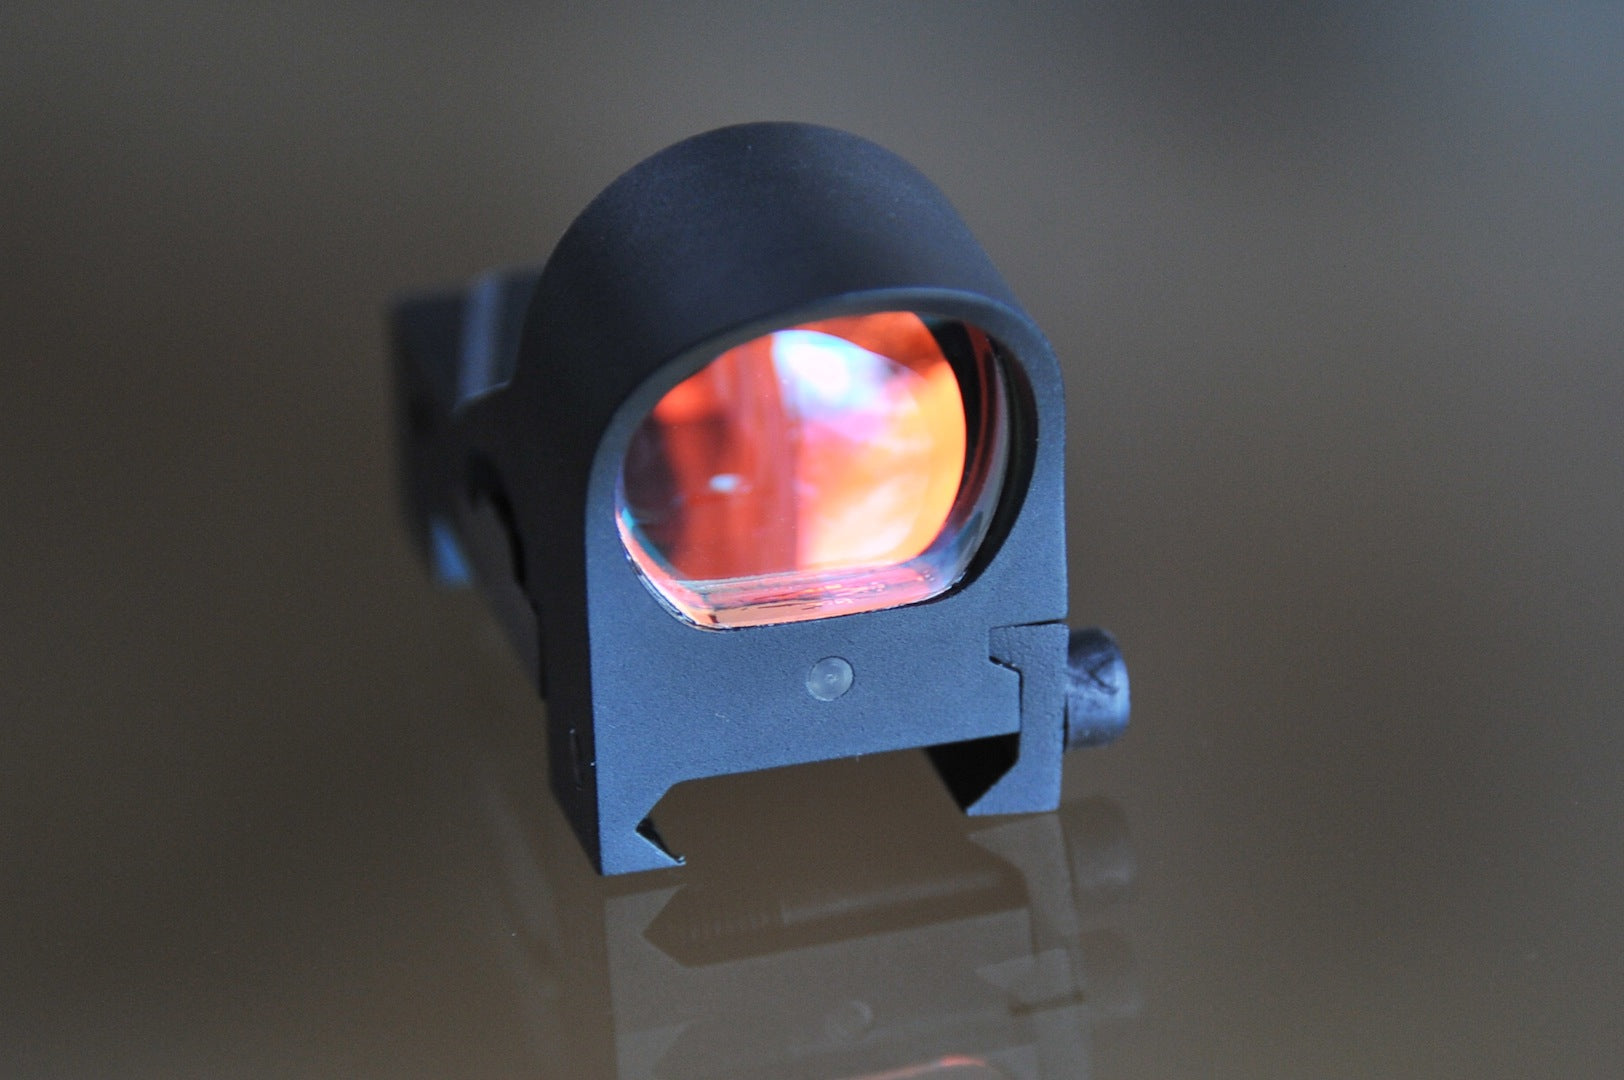 Red Dot Auto Light Sensing Sight built in sun shade, good for pistols.